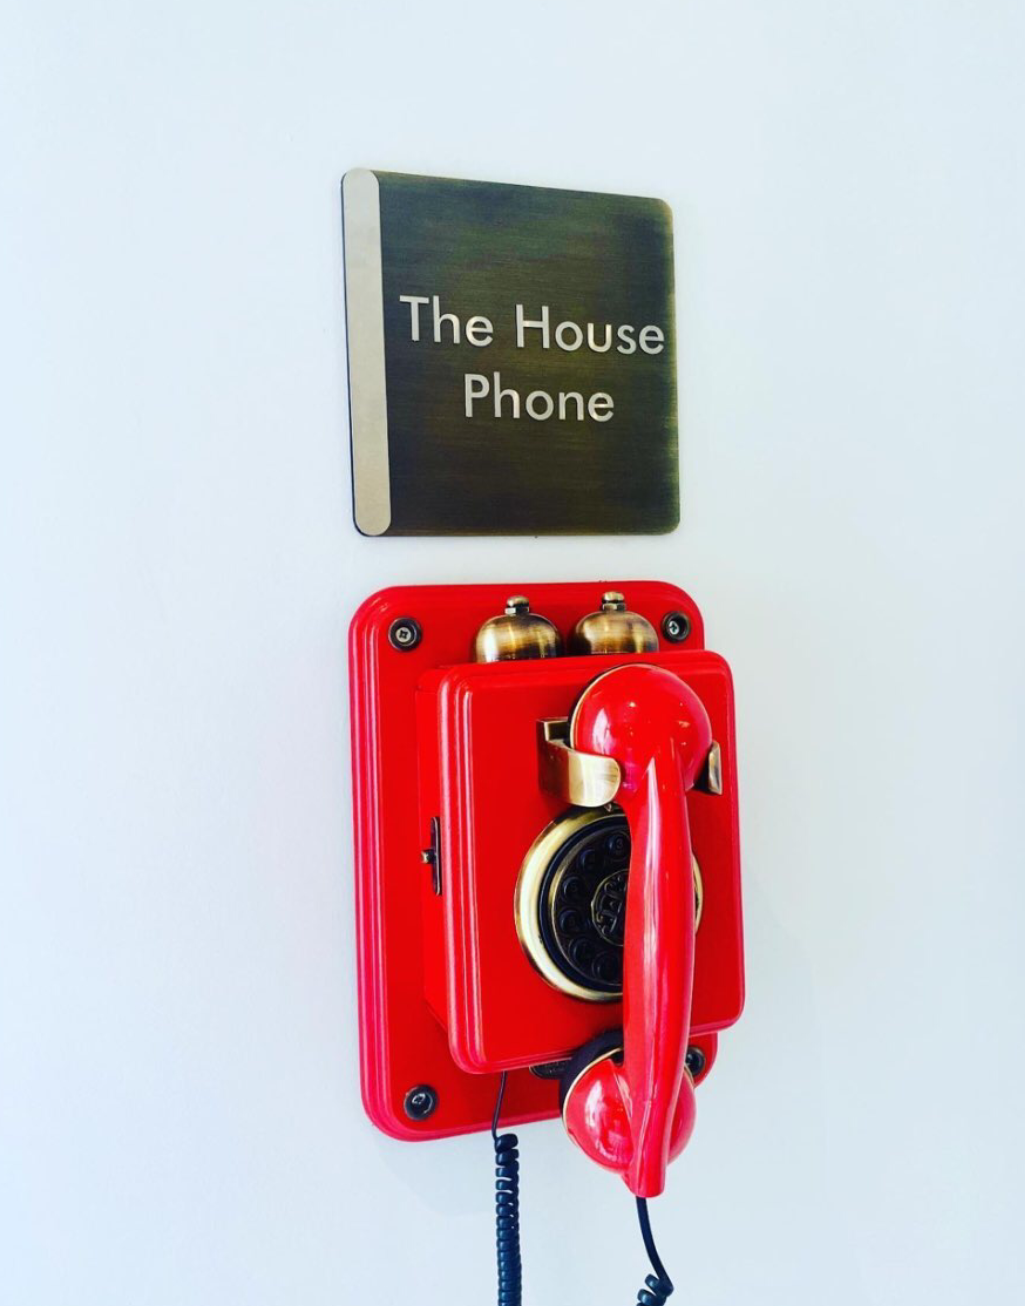 The House Phone